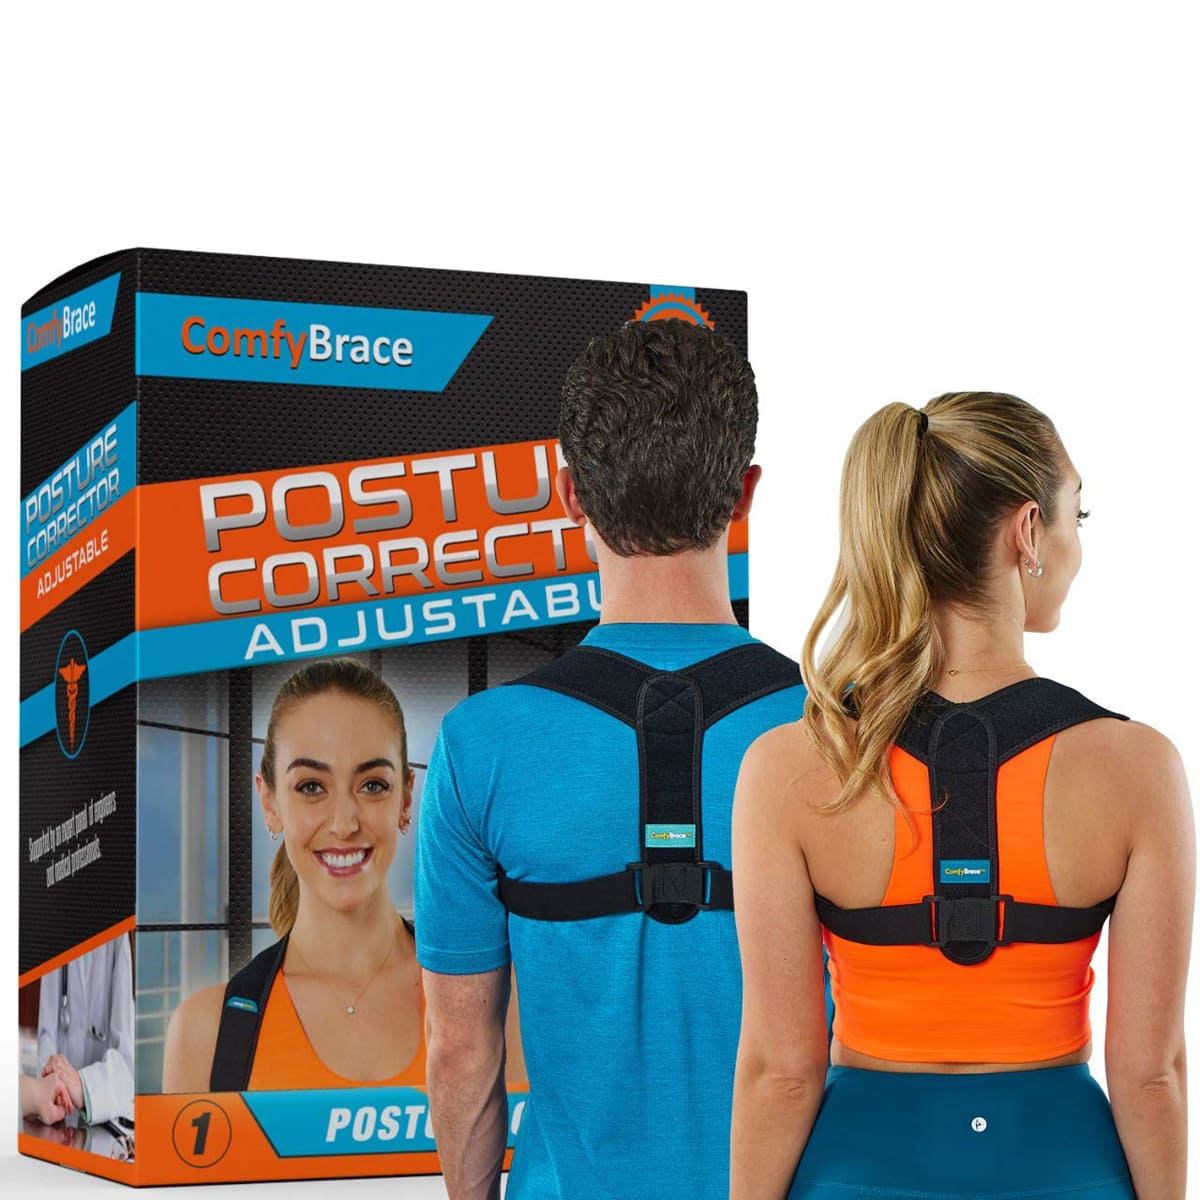 Posture Corrector for Men and Women - Infused Upper Back Spine, Neck,  Shoulder & Clavicle Support Brace - Adjustable & Breathable for Bad Posture,  Slumping, Pain Relief 